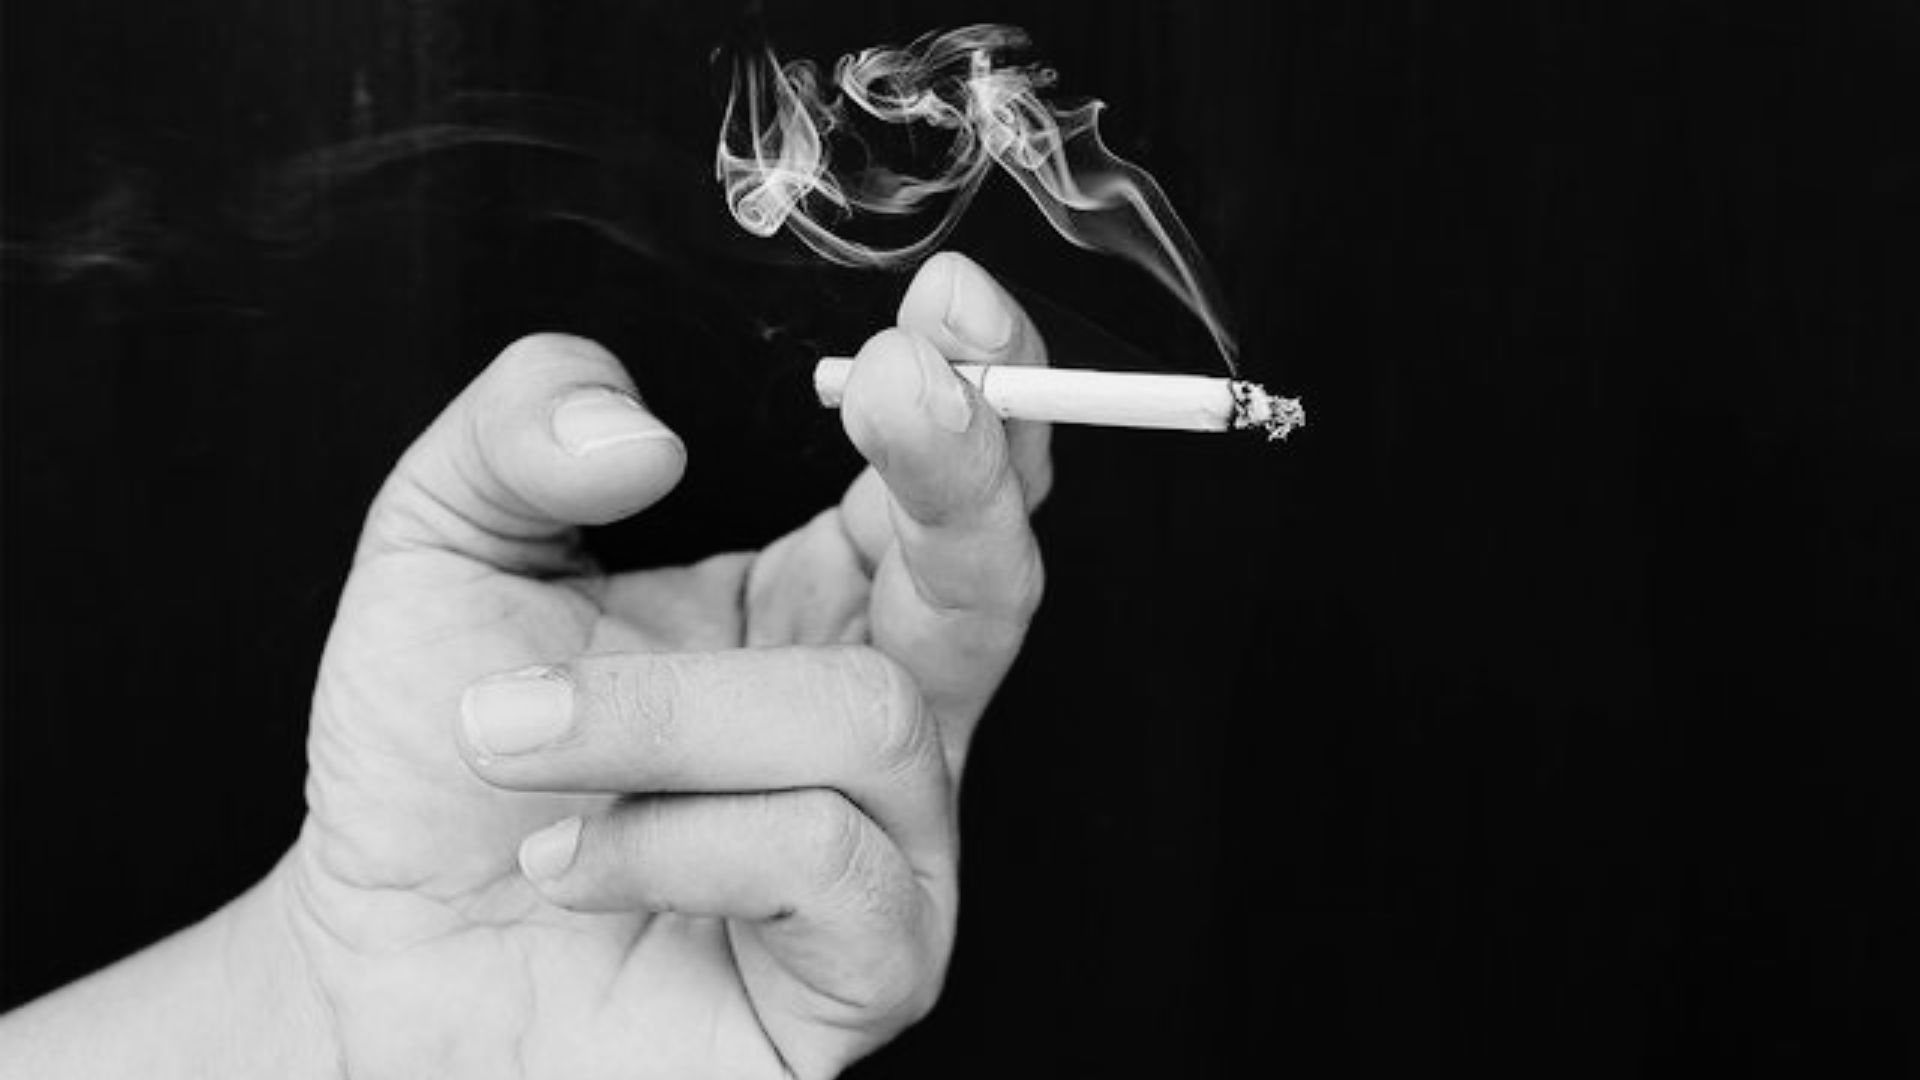 Karnataka Tightens Smoking Rules: New Age Limit and Ban on Hookah Bars